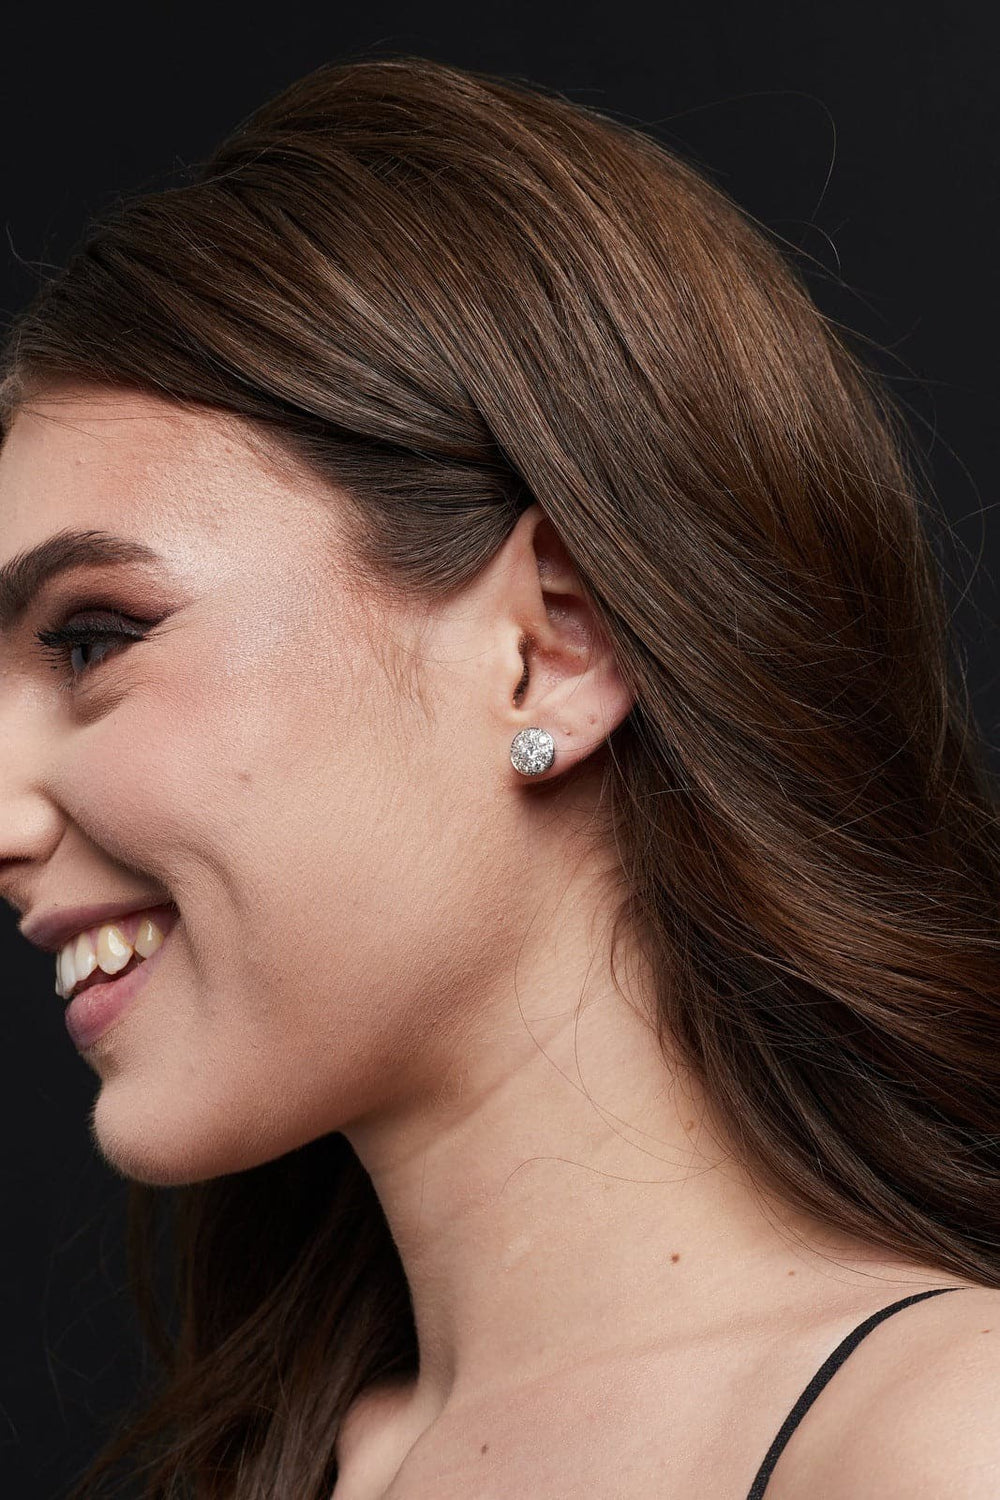 1.16ct G VS diamond earrings